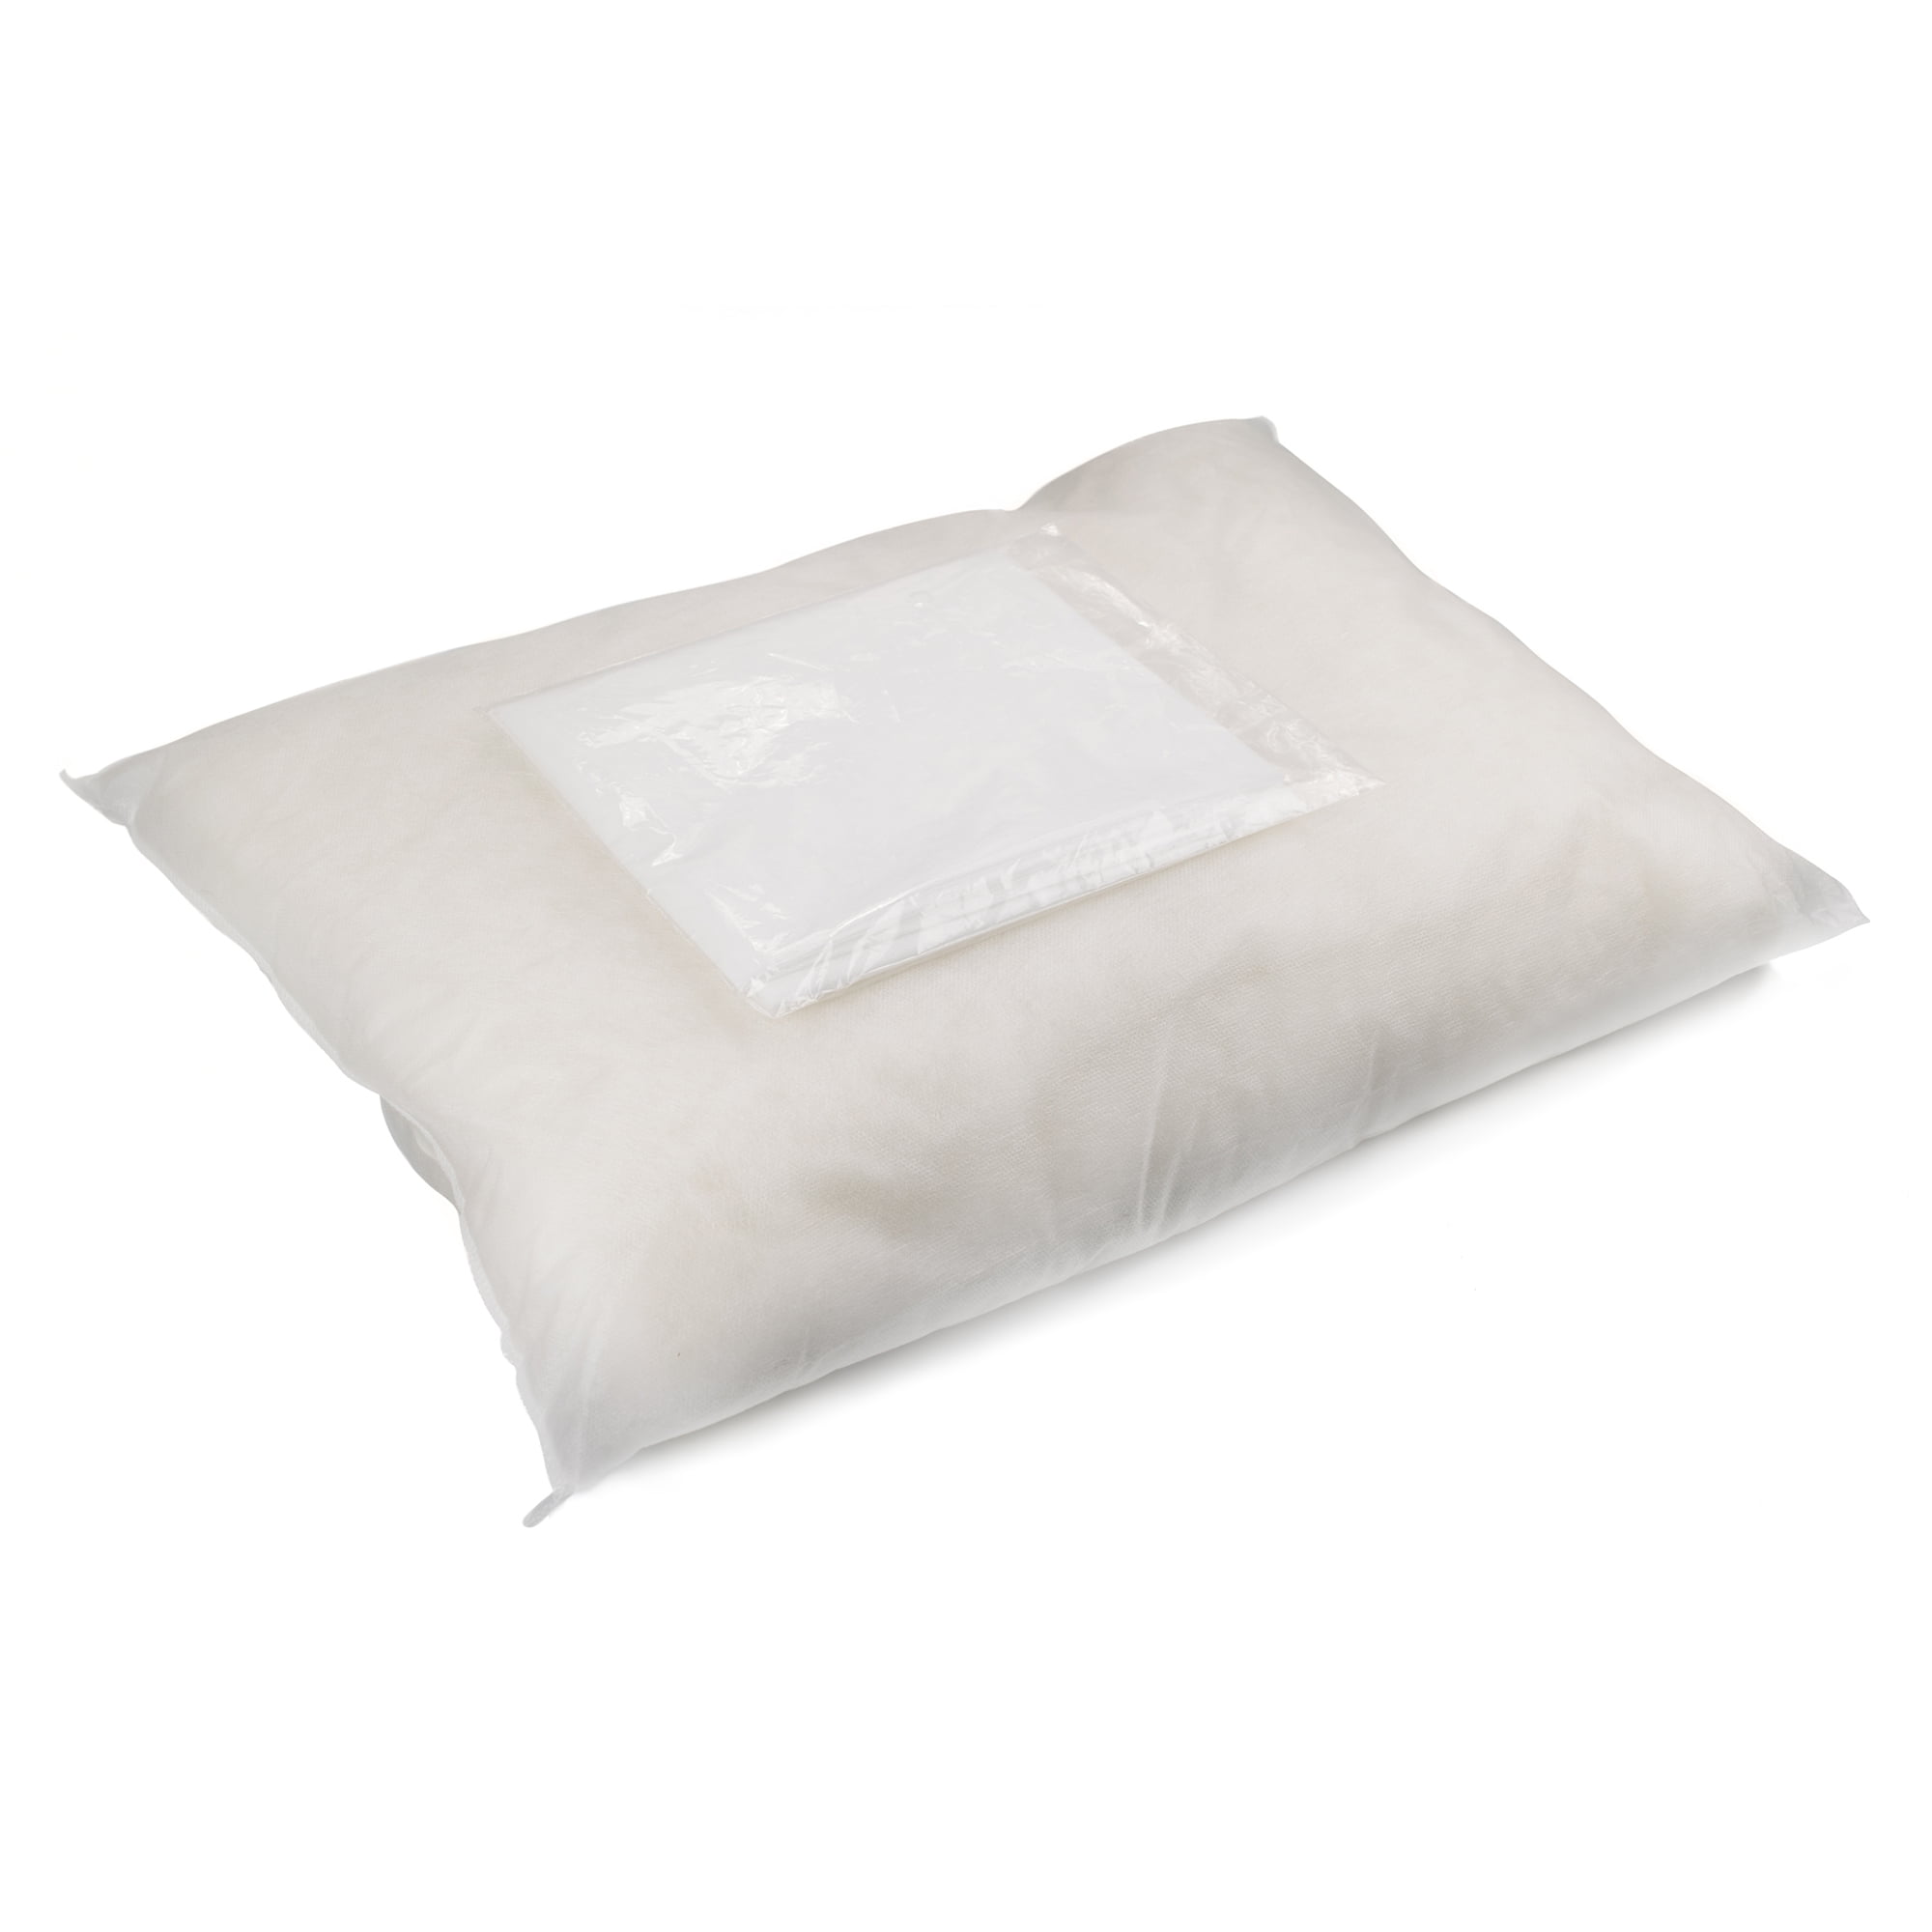 2 new white t180 platinum label pillow cases standard size 20x30 